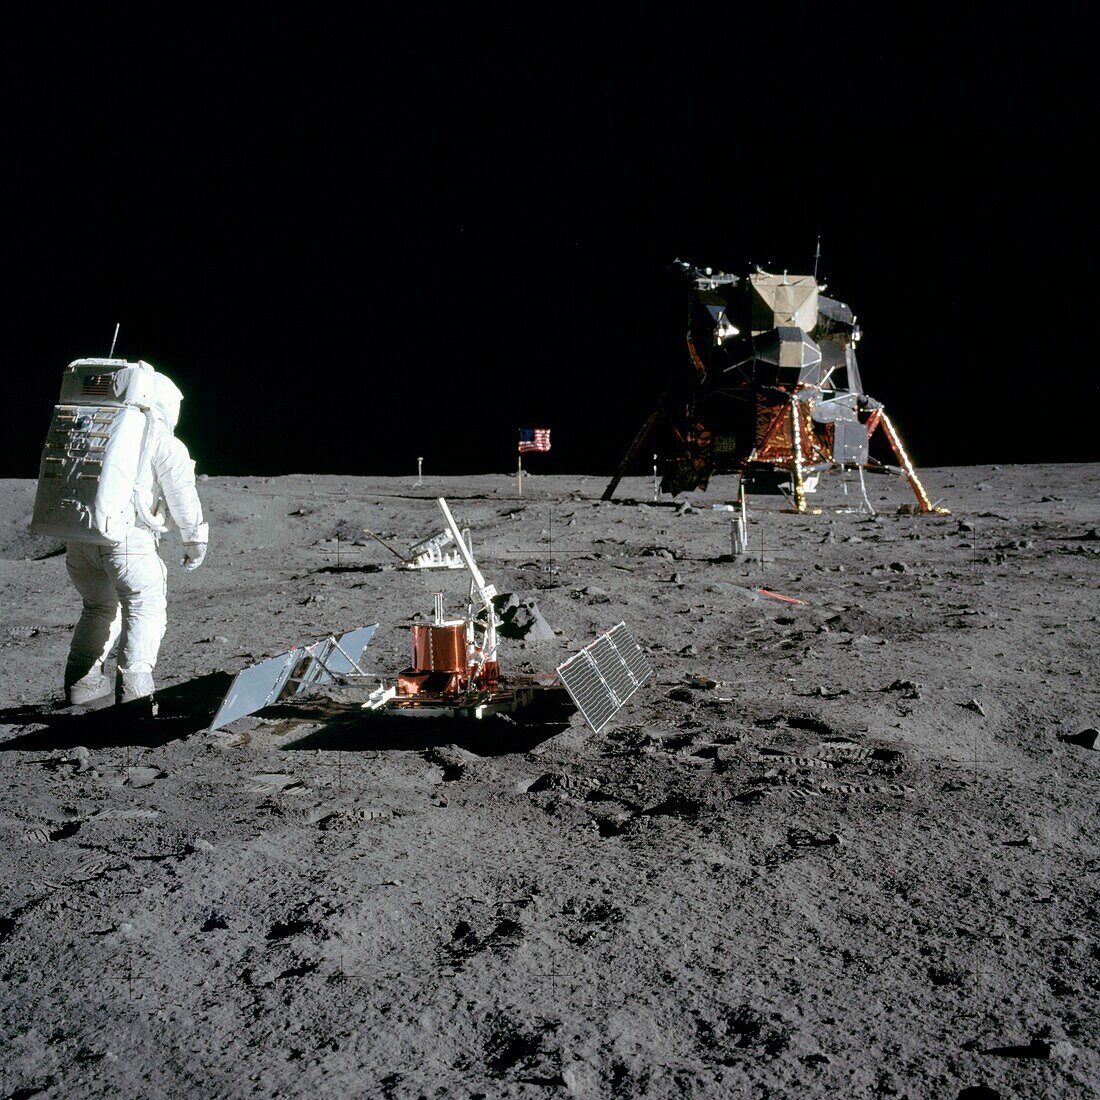 Apollo 11 astronaut Buzz Aldrin setting up experiment